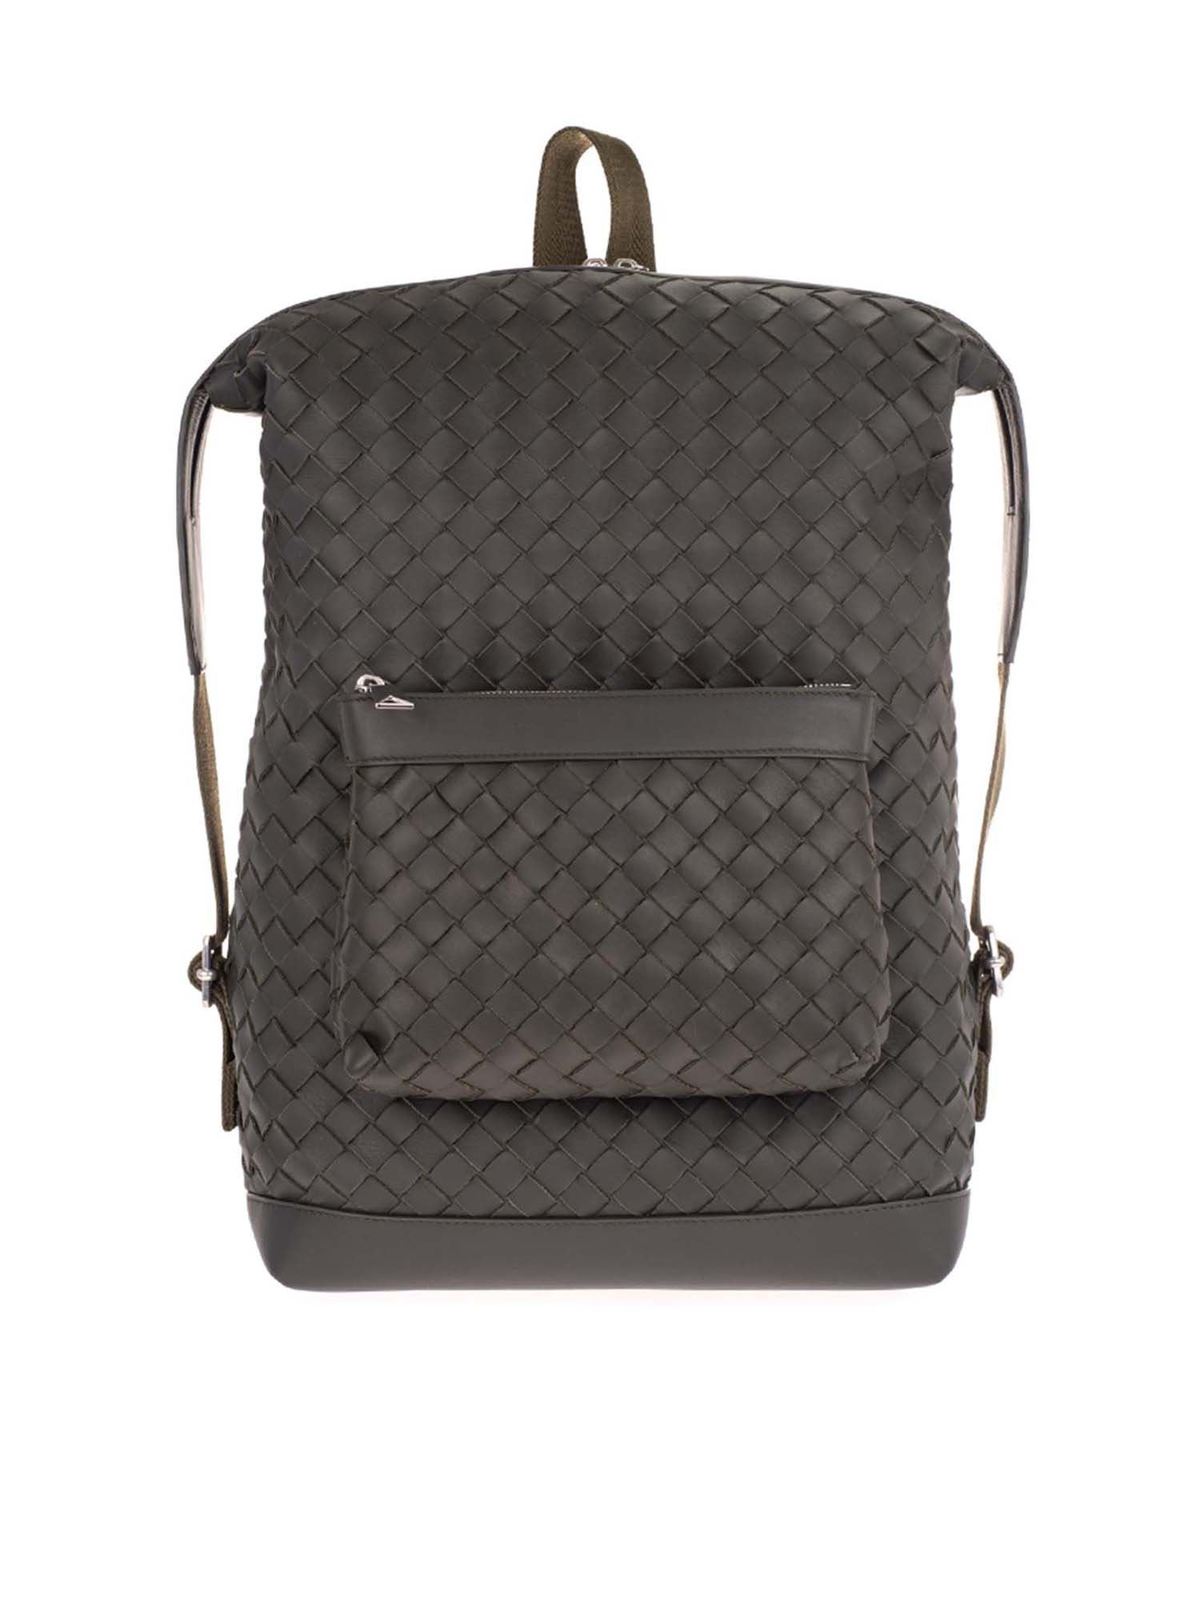 Bottega Veneta - Intrecciato nappa backpack - backpacks - 653118V0E543203